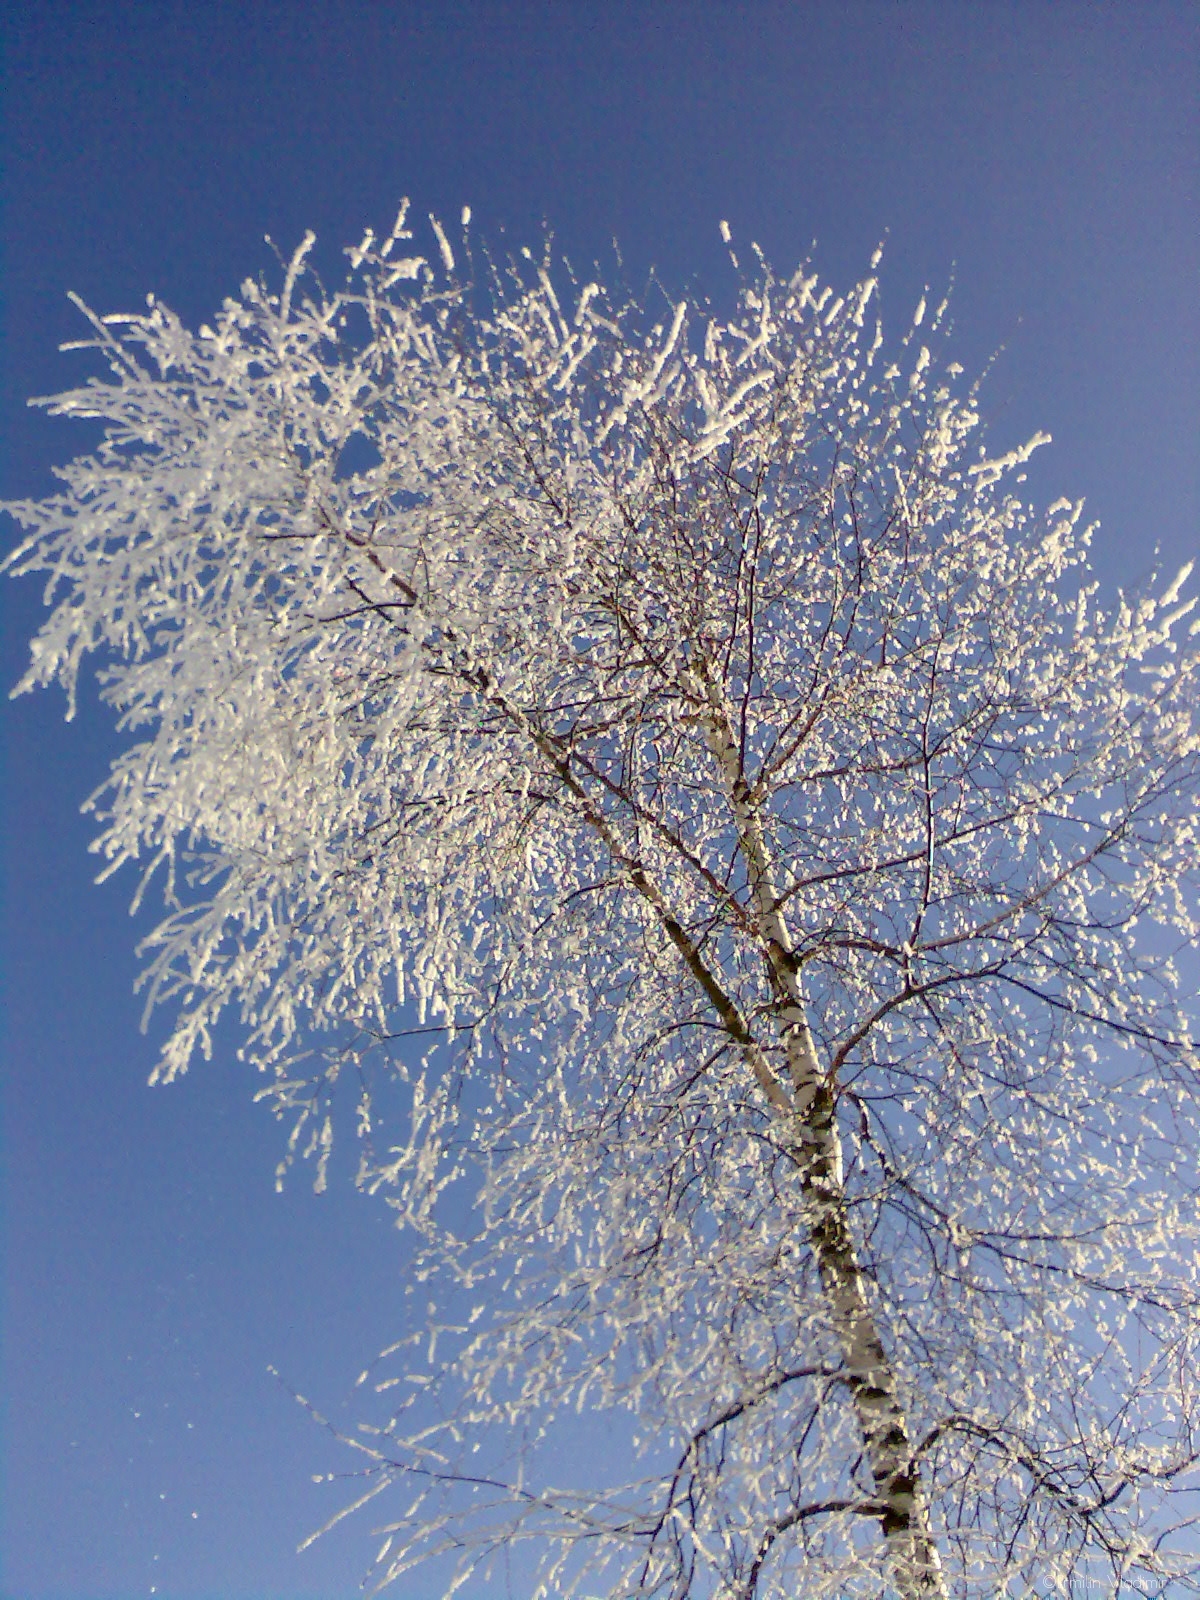 Морозный денек | Фотограф Ermilin Vladimir | foto.by фото.бай